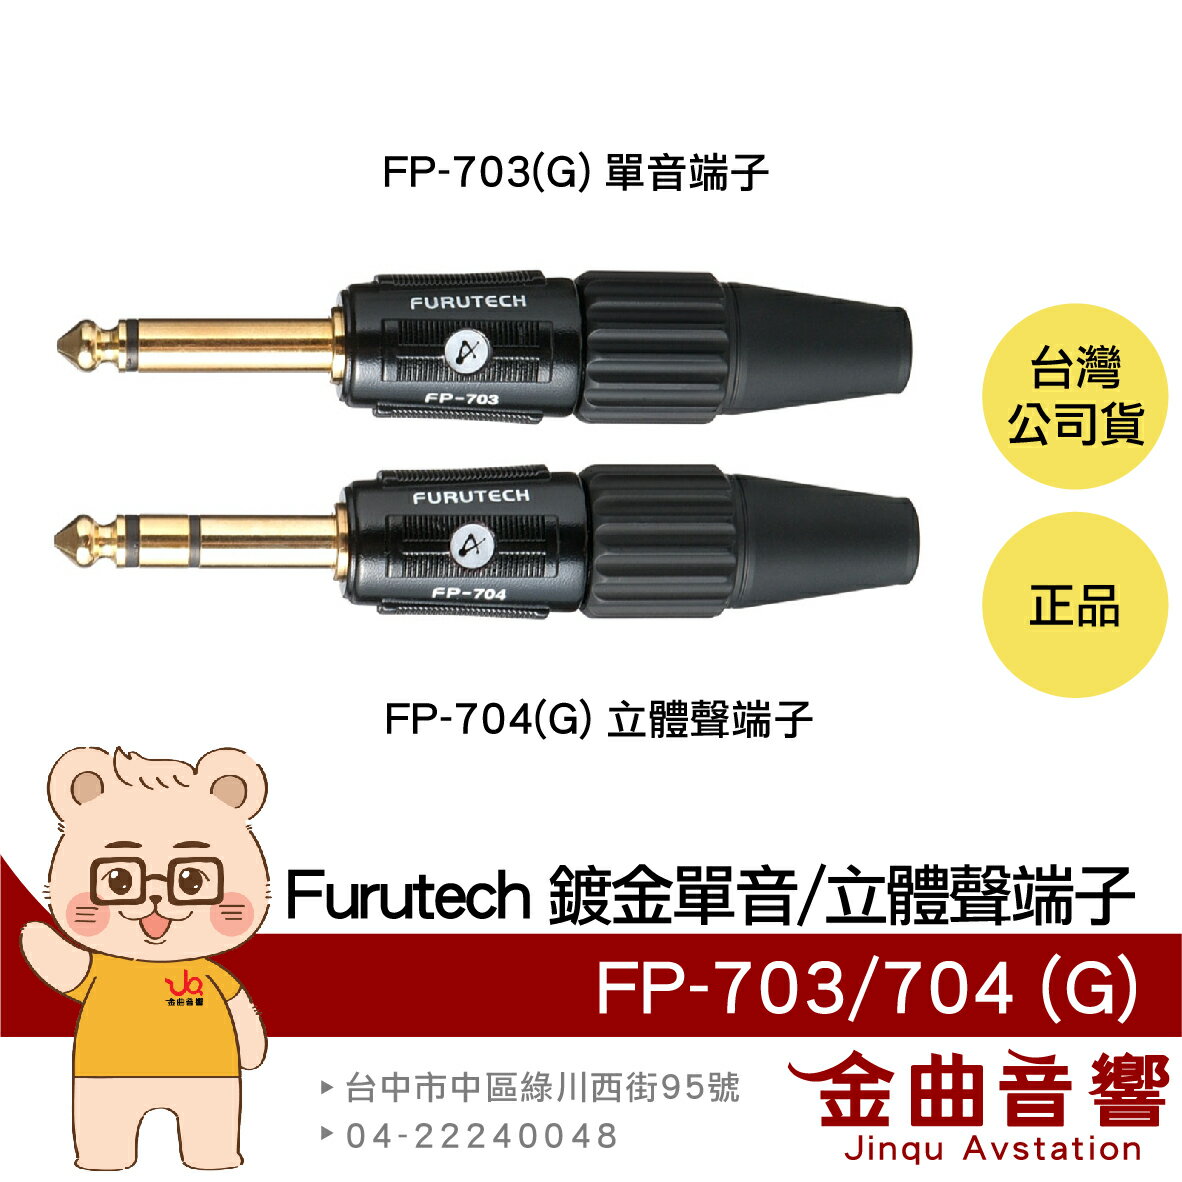 FURUTECH 古河 FP-703(G) FP-704(G) 鍍金 單音/立體聲 端子 | 金曲音響